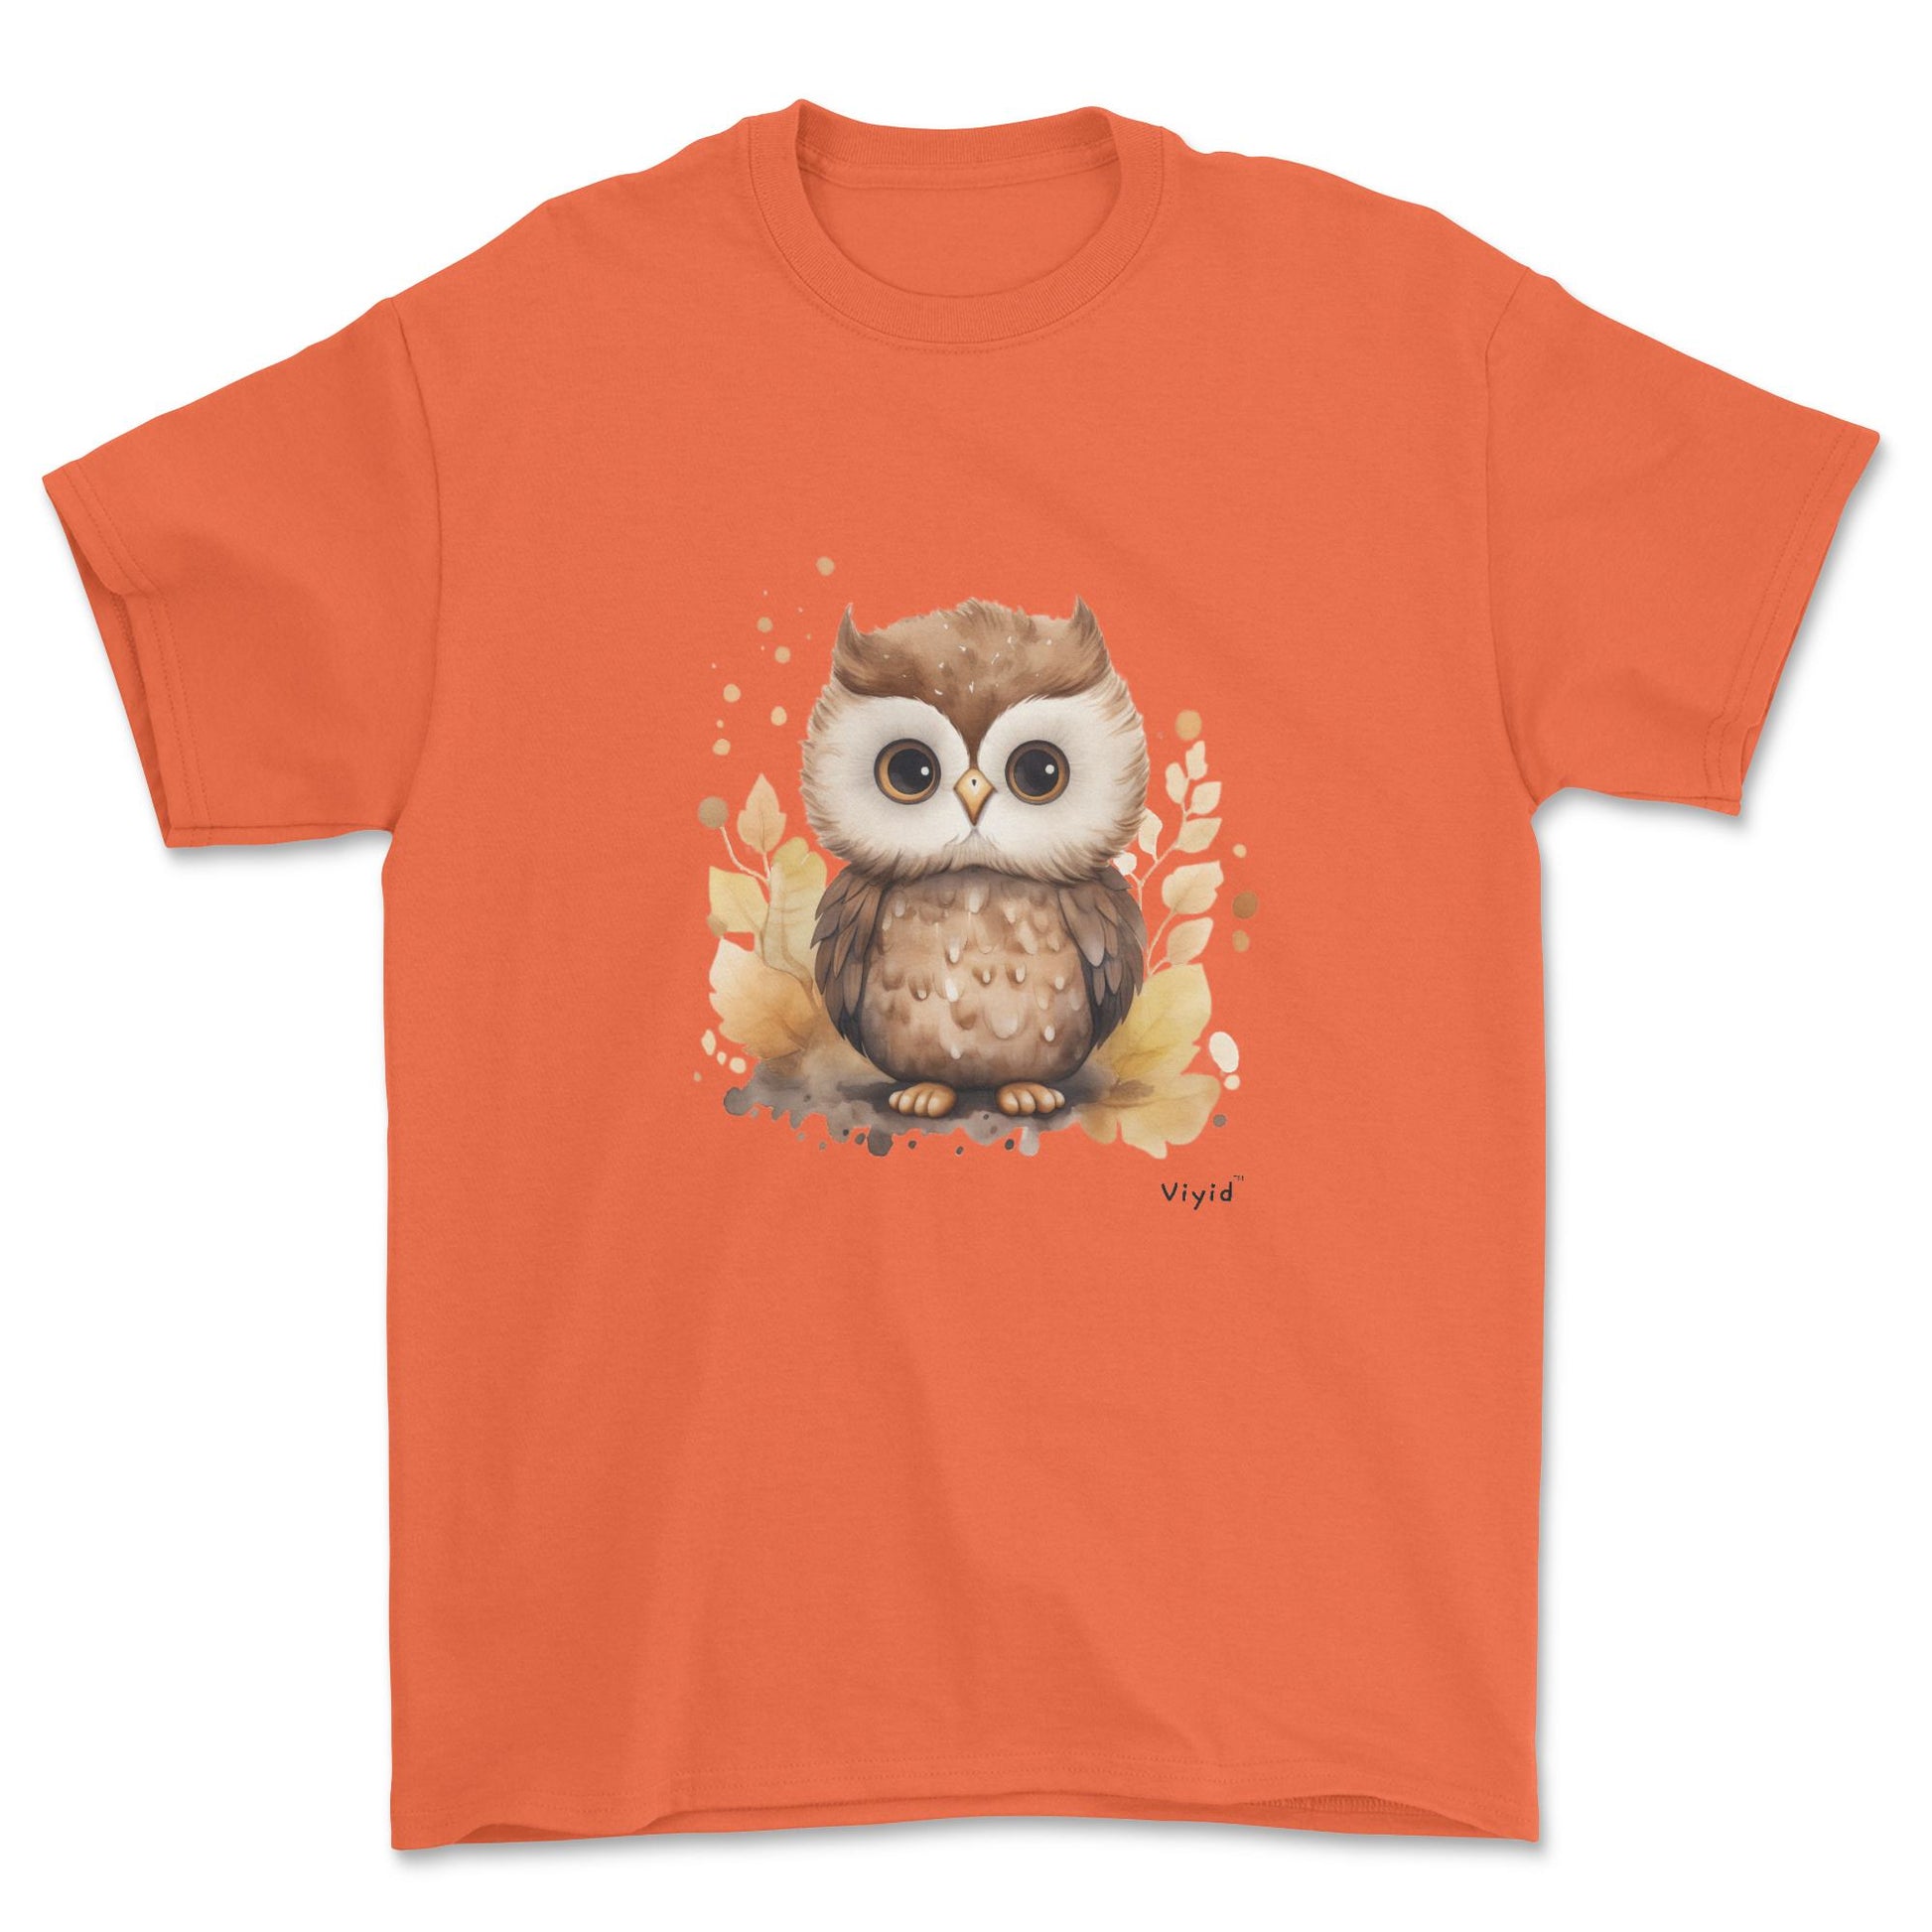 nocturnal owl adult t-shirt orange